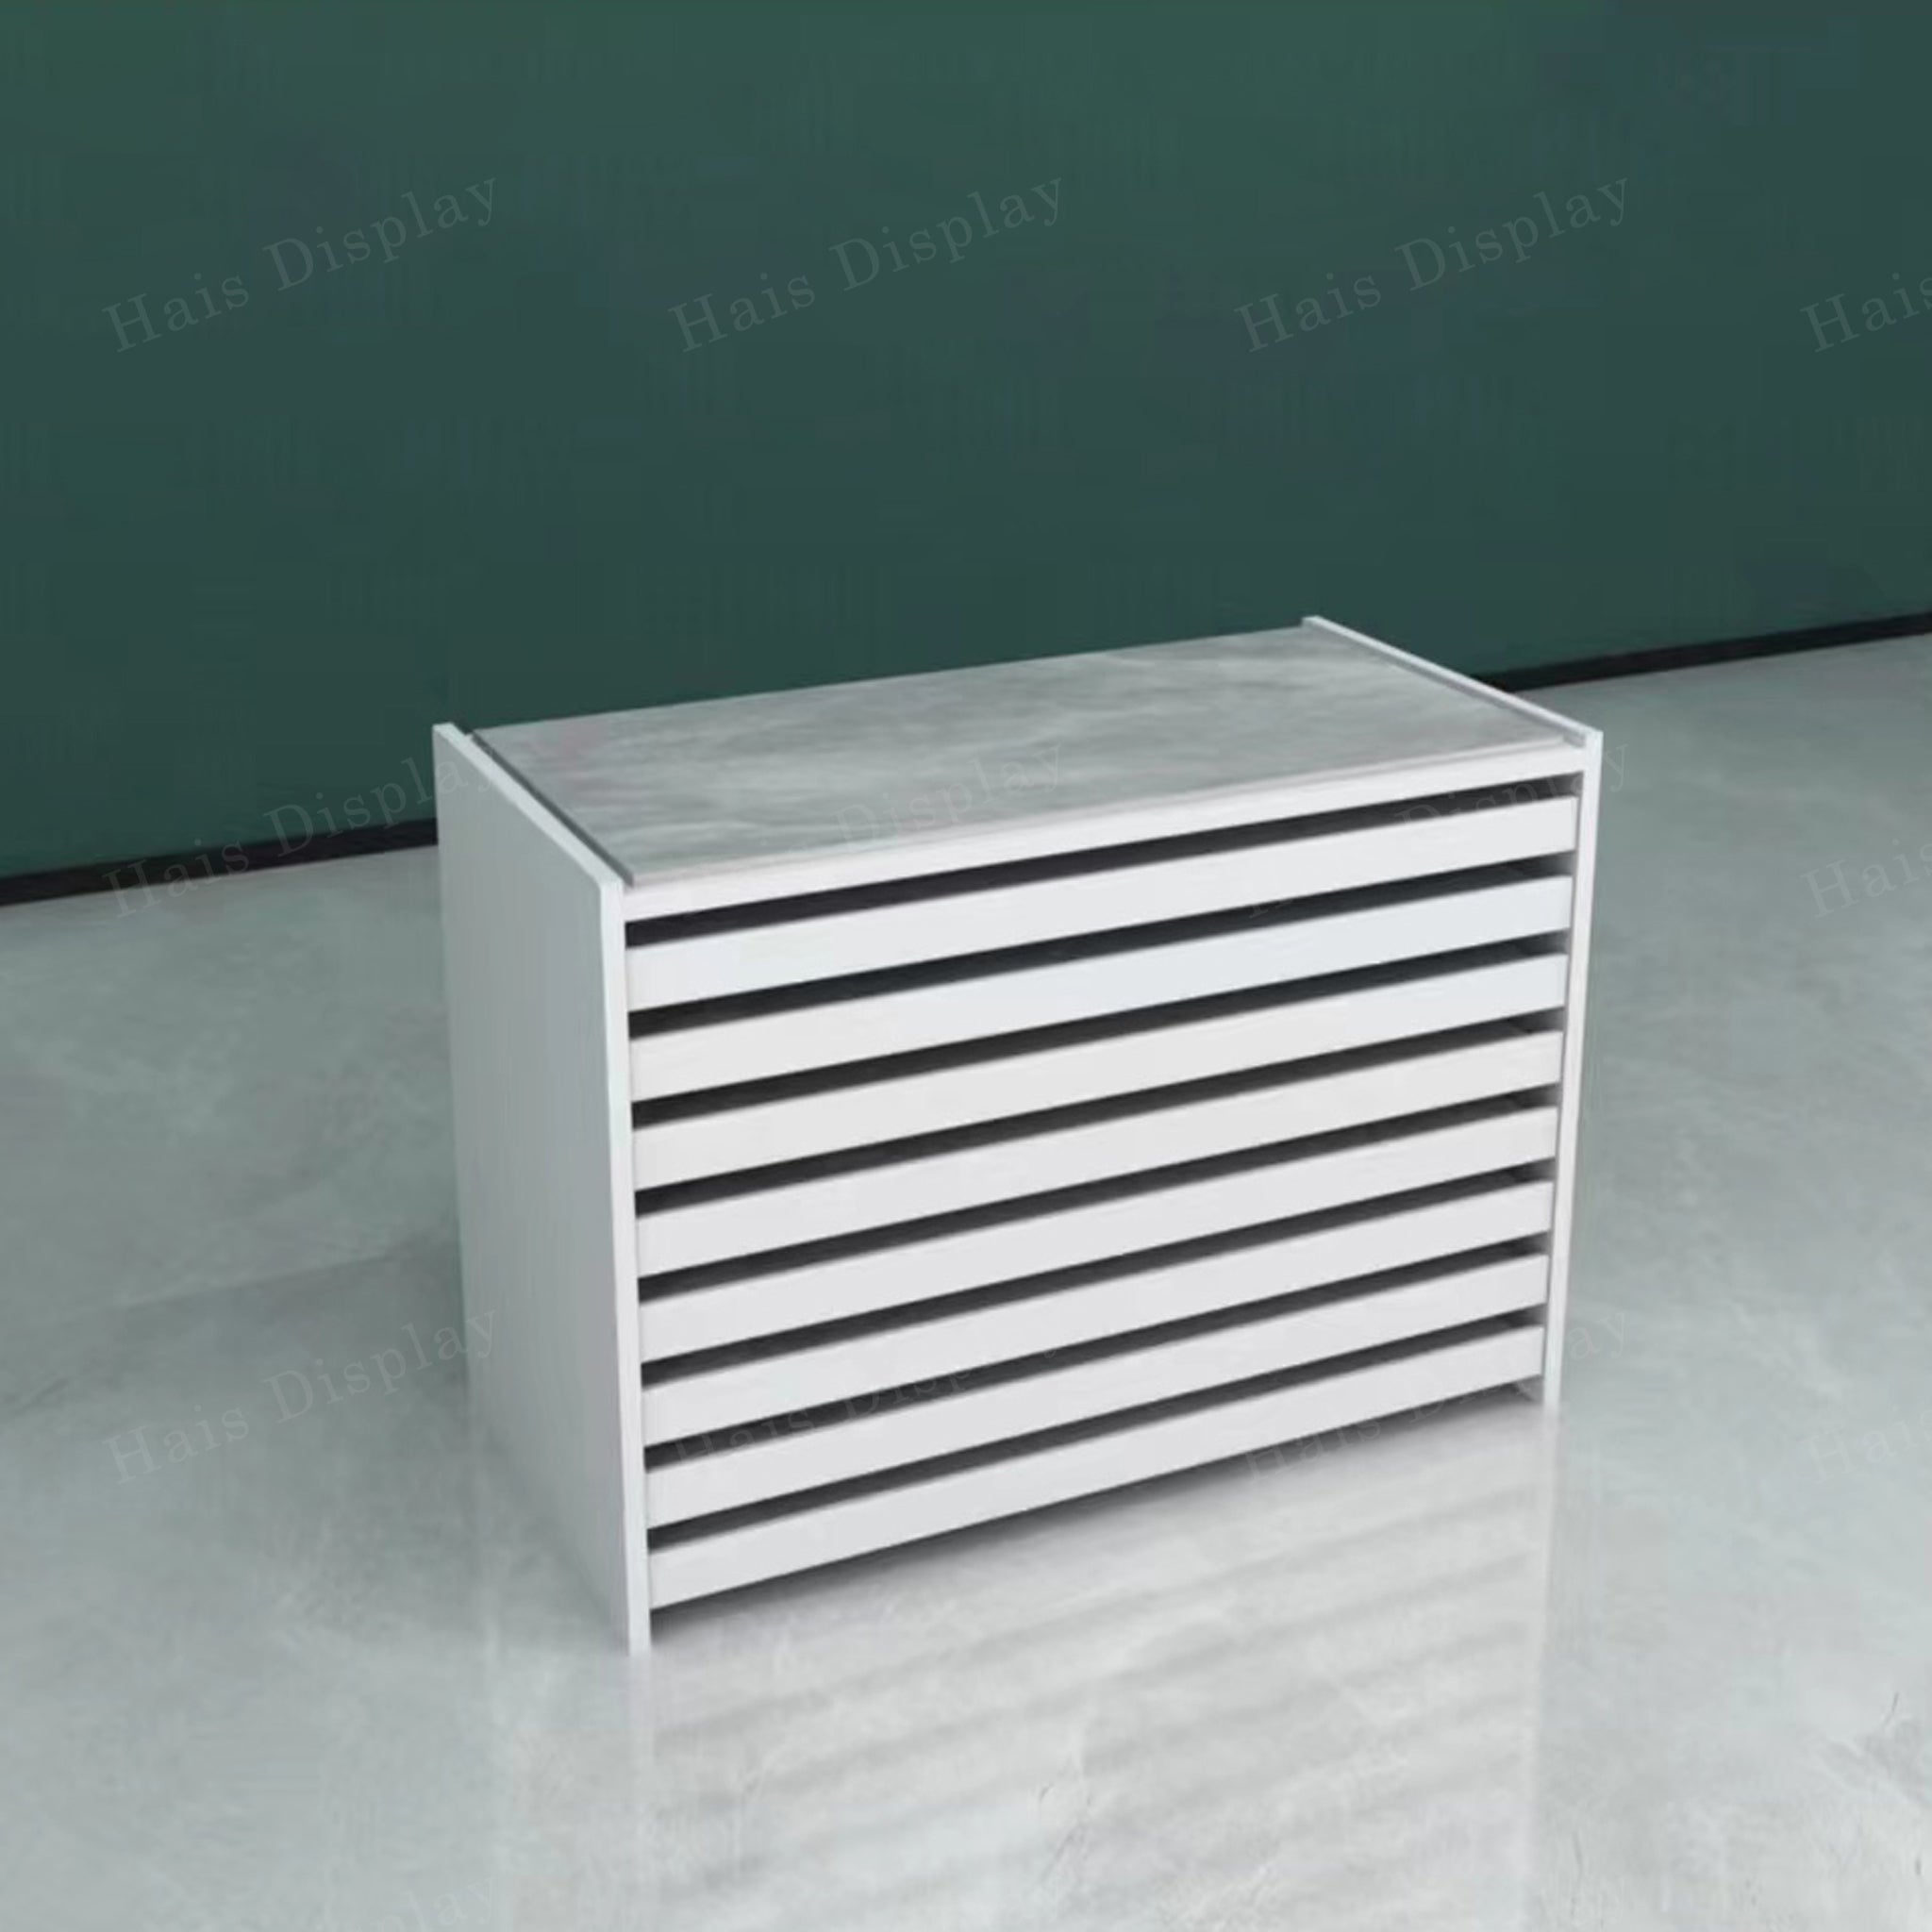 Tile Table Cabinet - 600*1200mm - D21